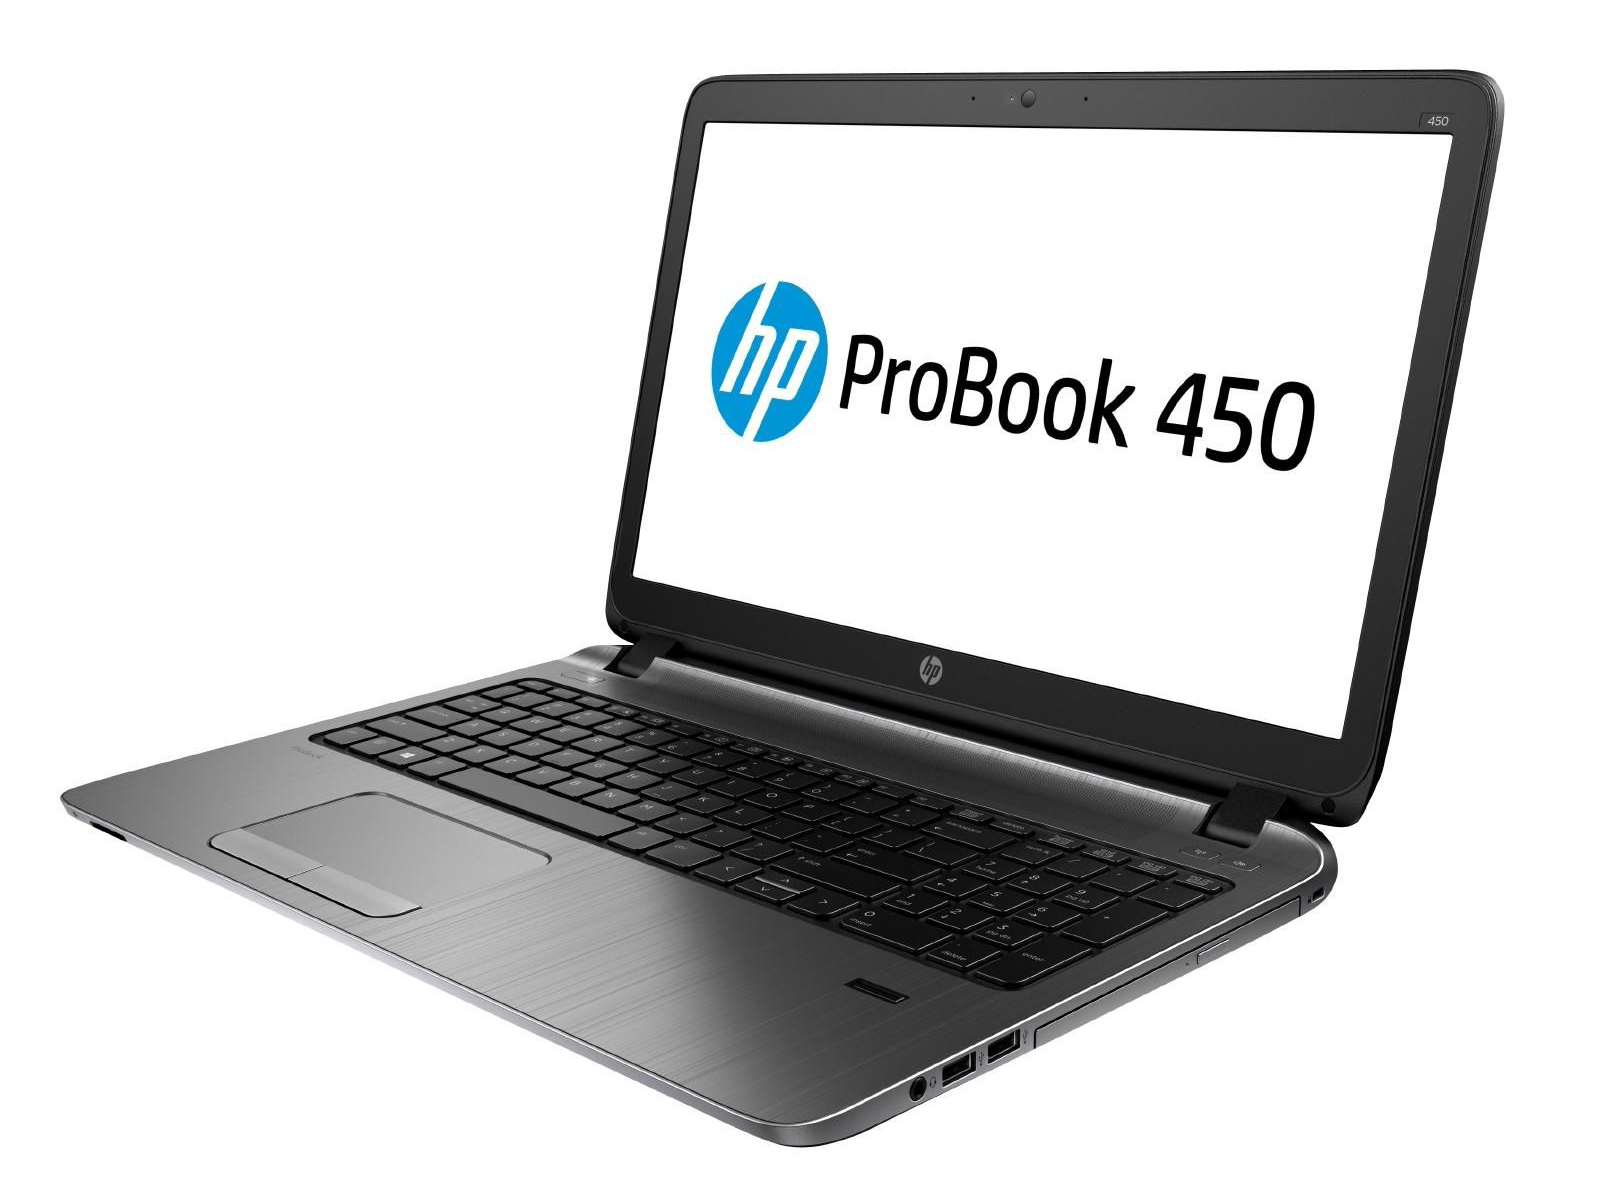 HP ProBook 450 G2 Intel Core i3, 4GB, 128GB SSD, Windows 10